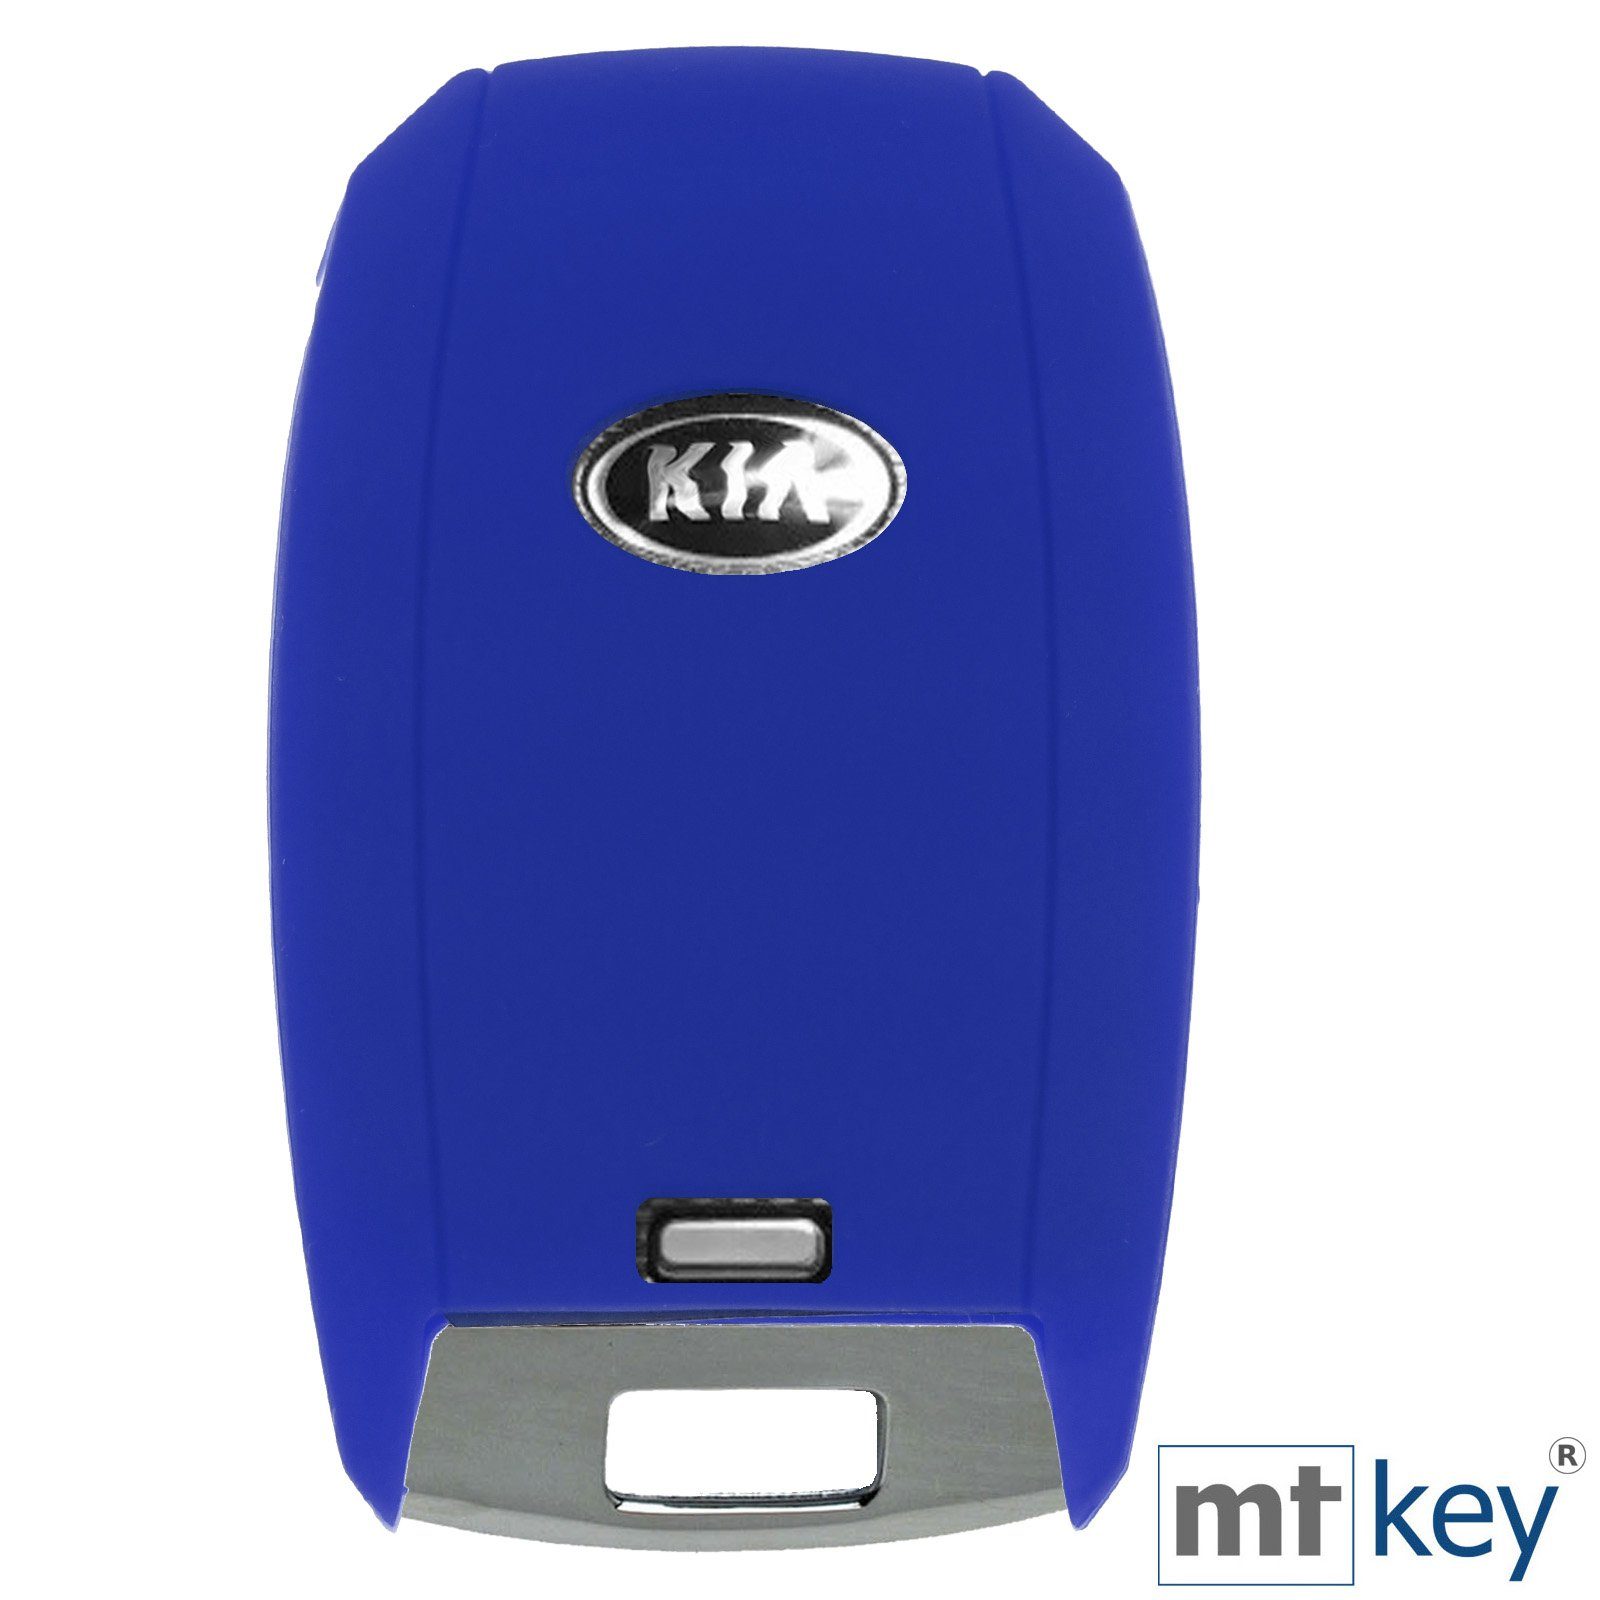 mt-key Schlüsseltasche Silikon 3 Tasten Rio Stonic Picantio Softcase KIA Autoschlüssel Ceed KEYLESS Soul Sportage für Blau, Schutzhülle